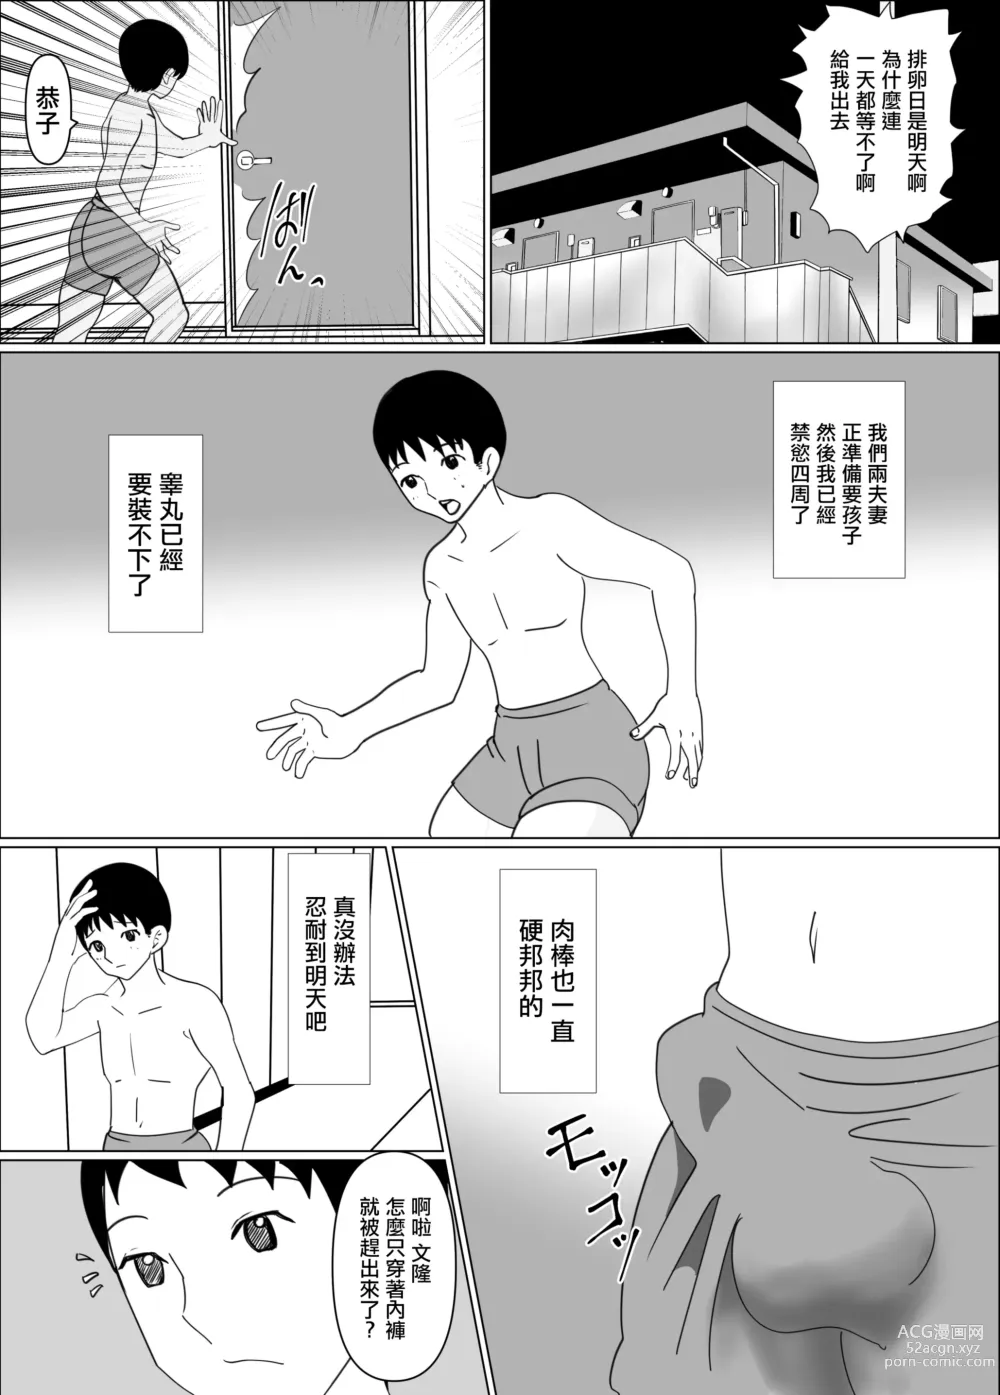 Page 2 of doujinshi 為了在妻子的排卵日授精而攢的精子被丈母娘看上了